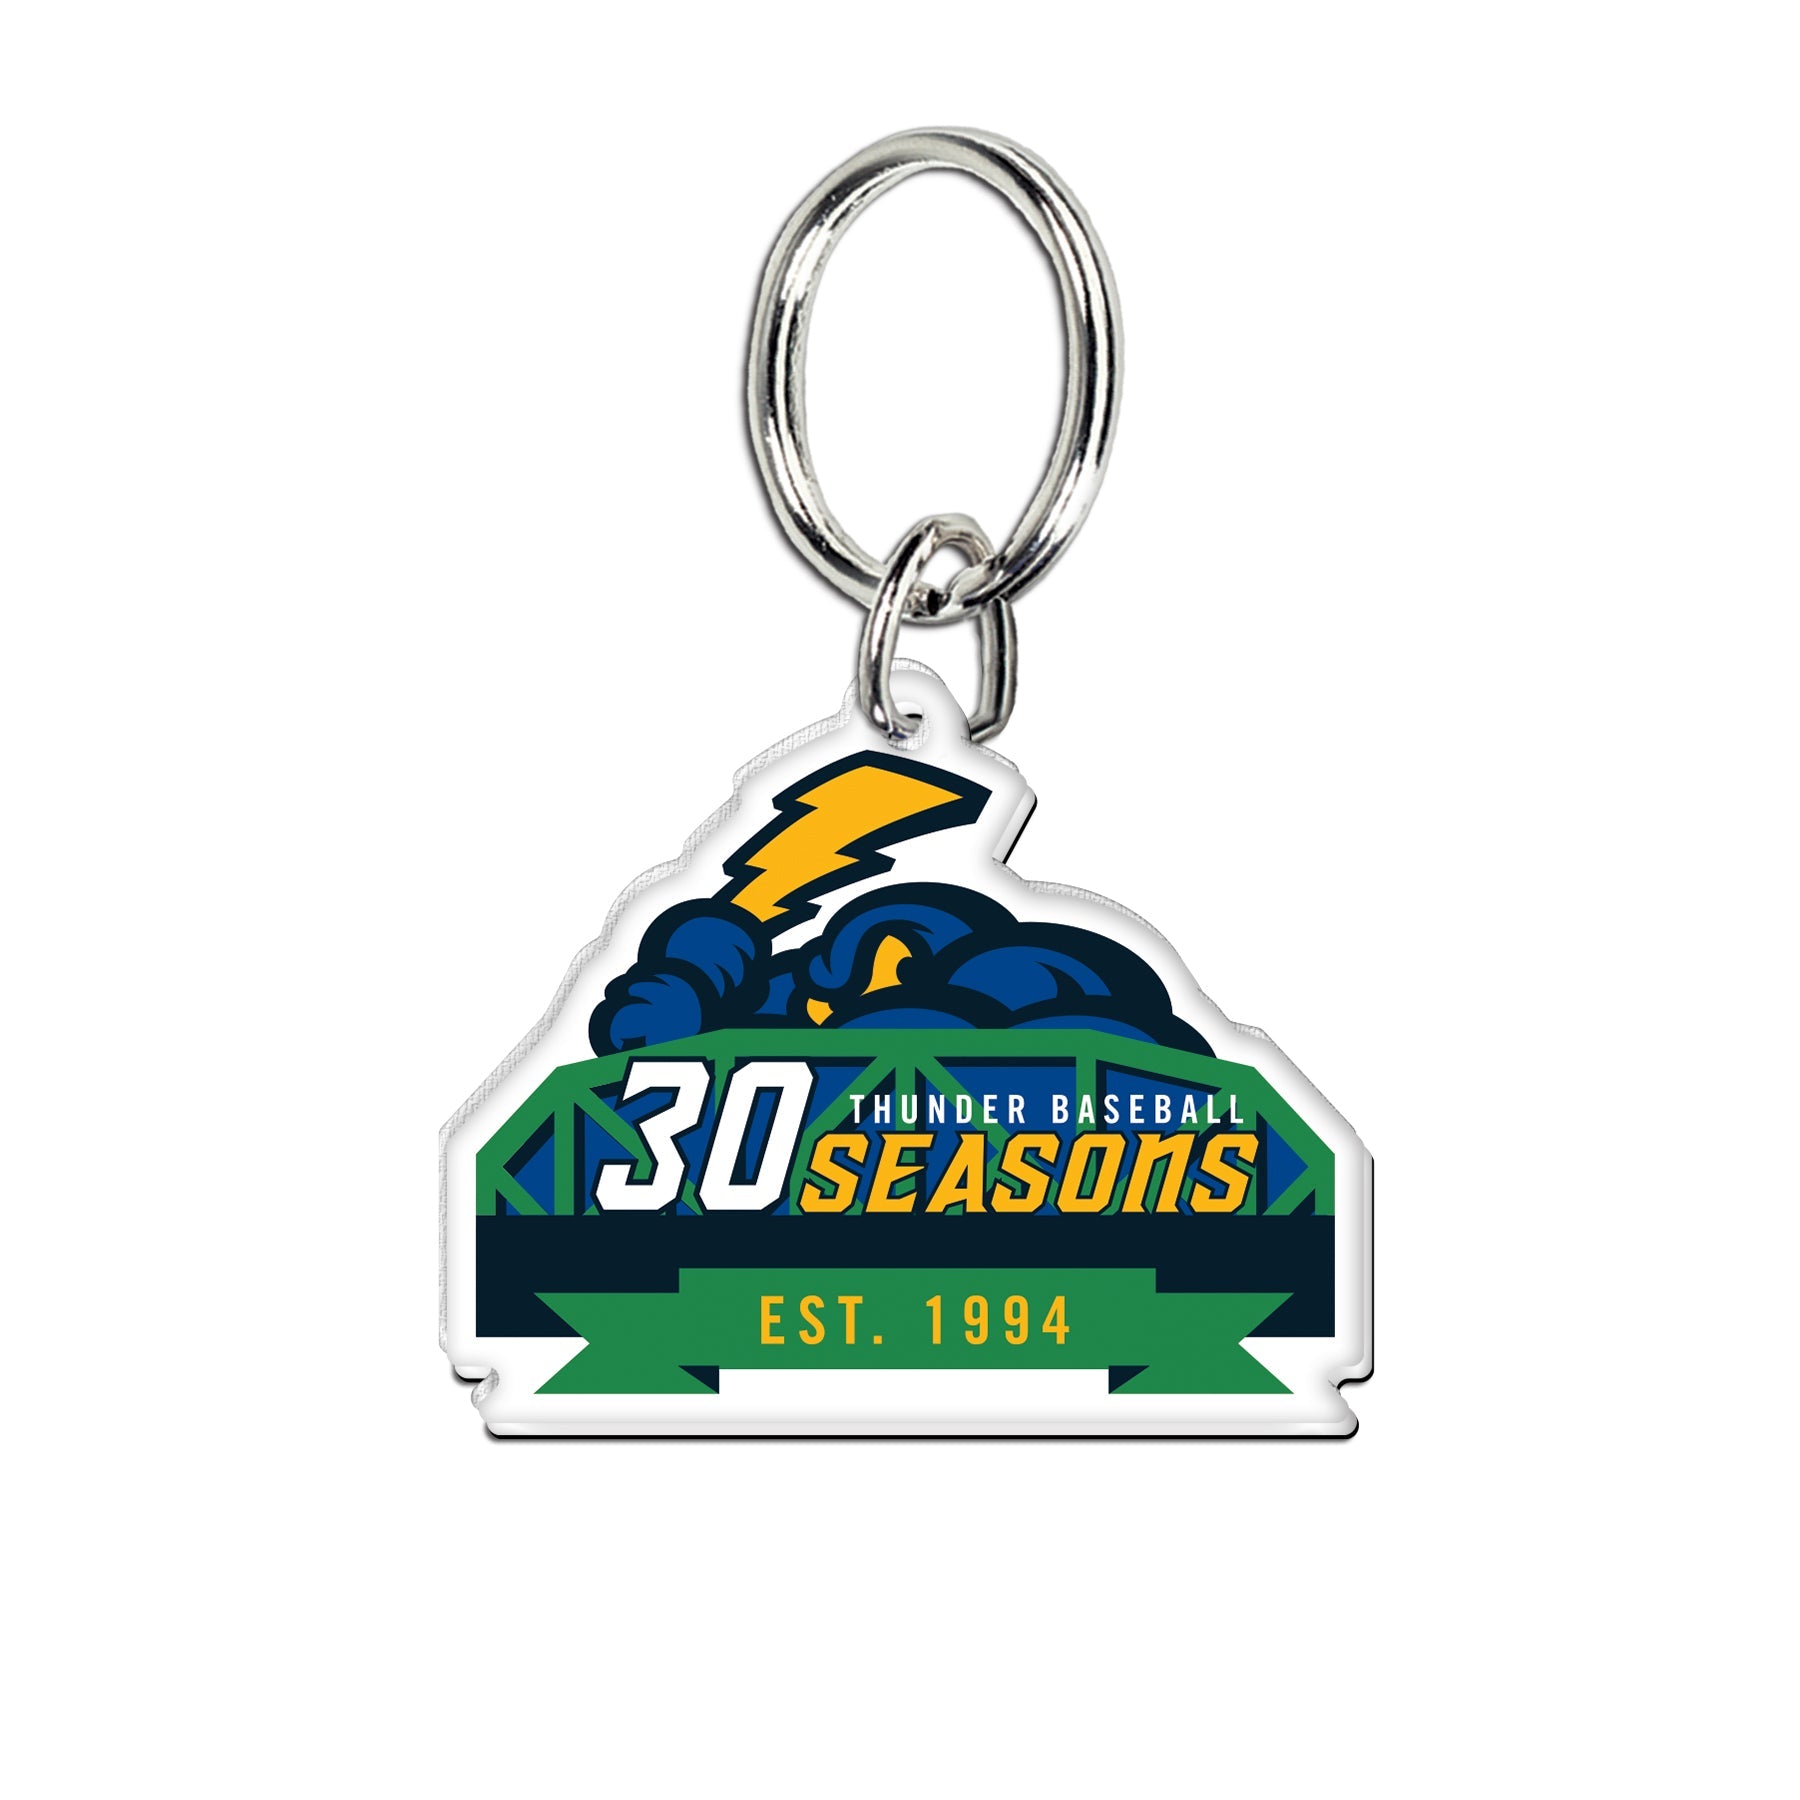 Acrylic 30th Season Key Ring-0